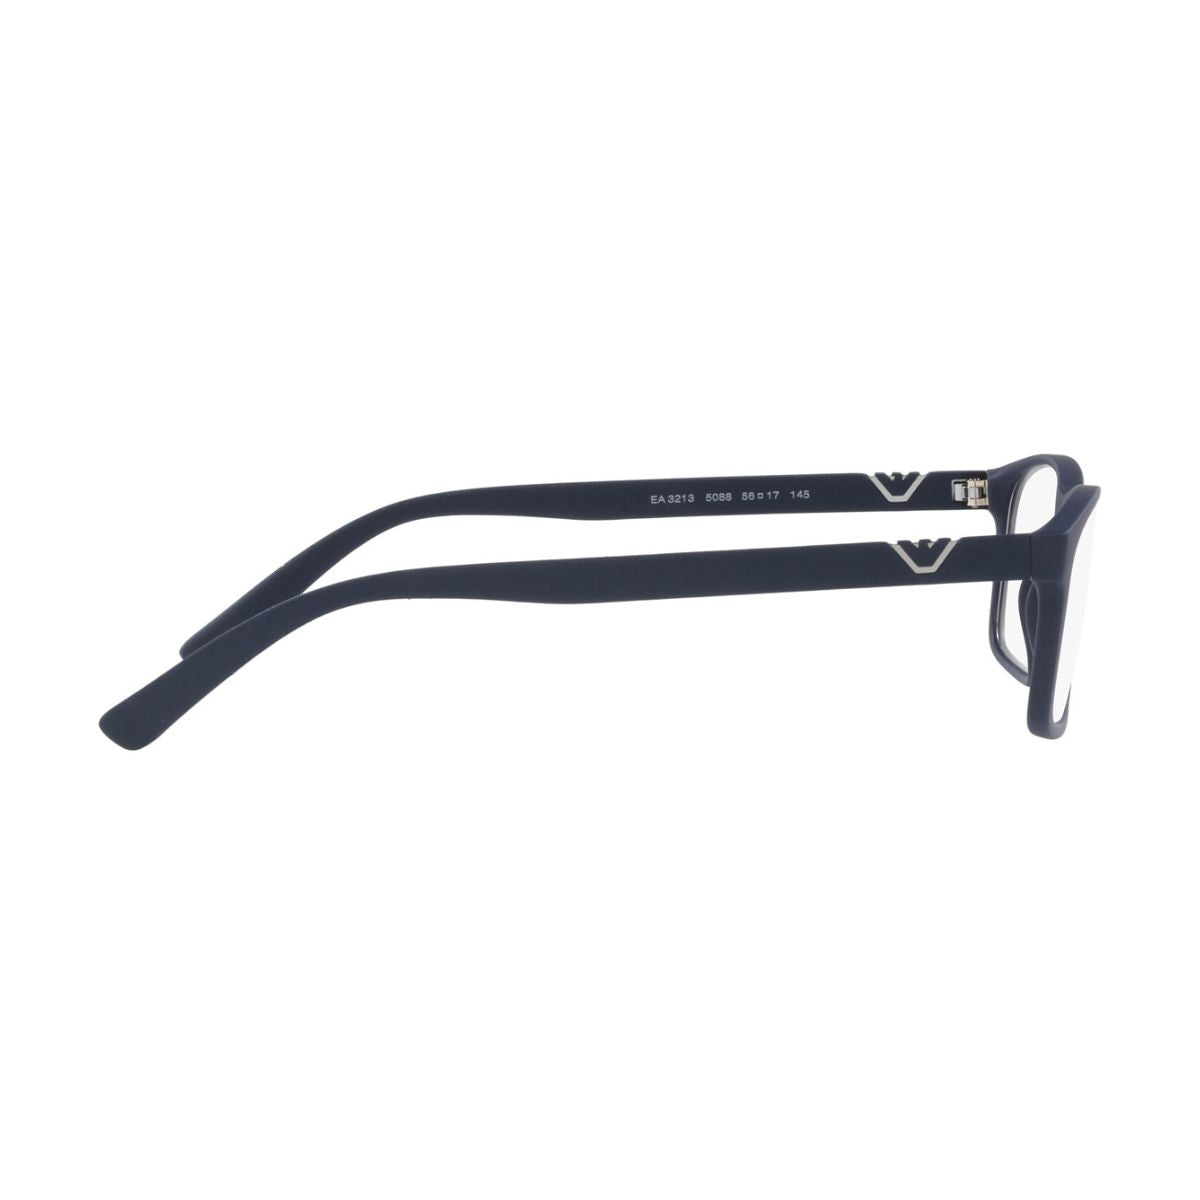 "Emporio Armani 3213 5088  eyesight & eye glasses frame for men's online at optorium"